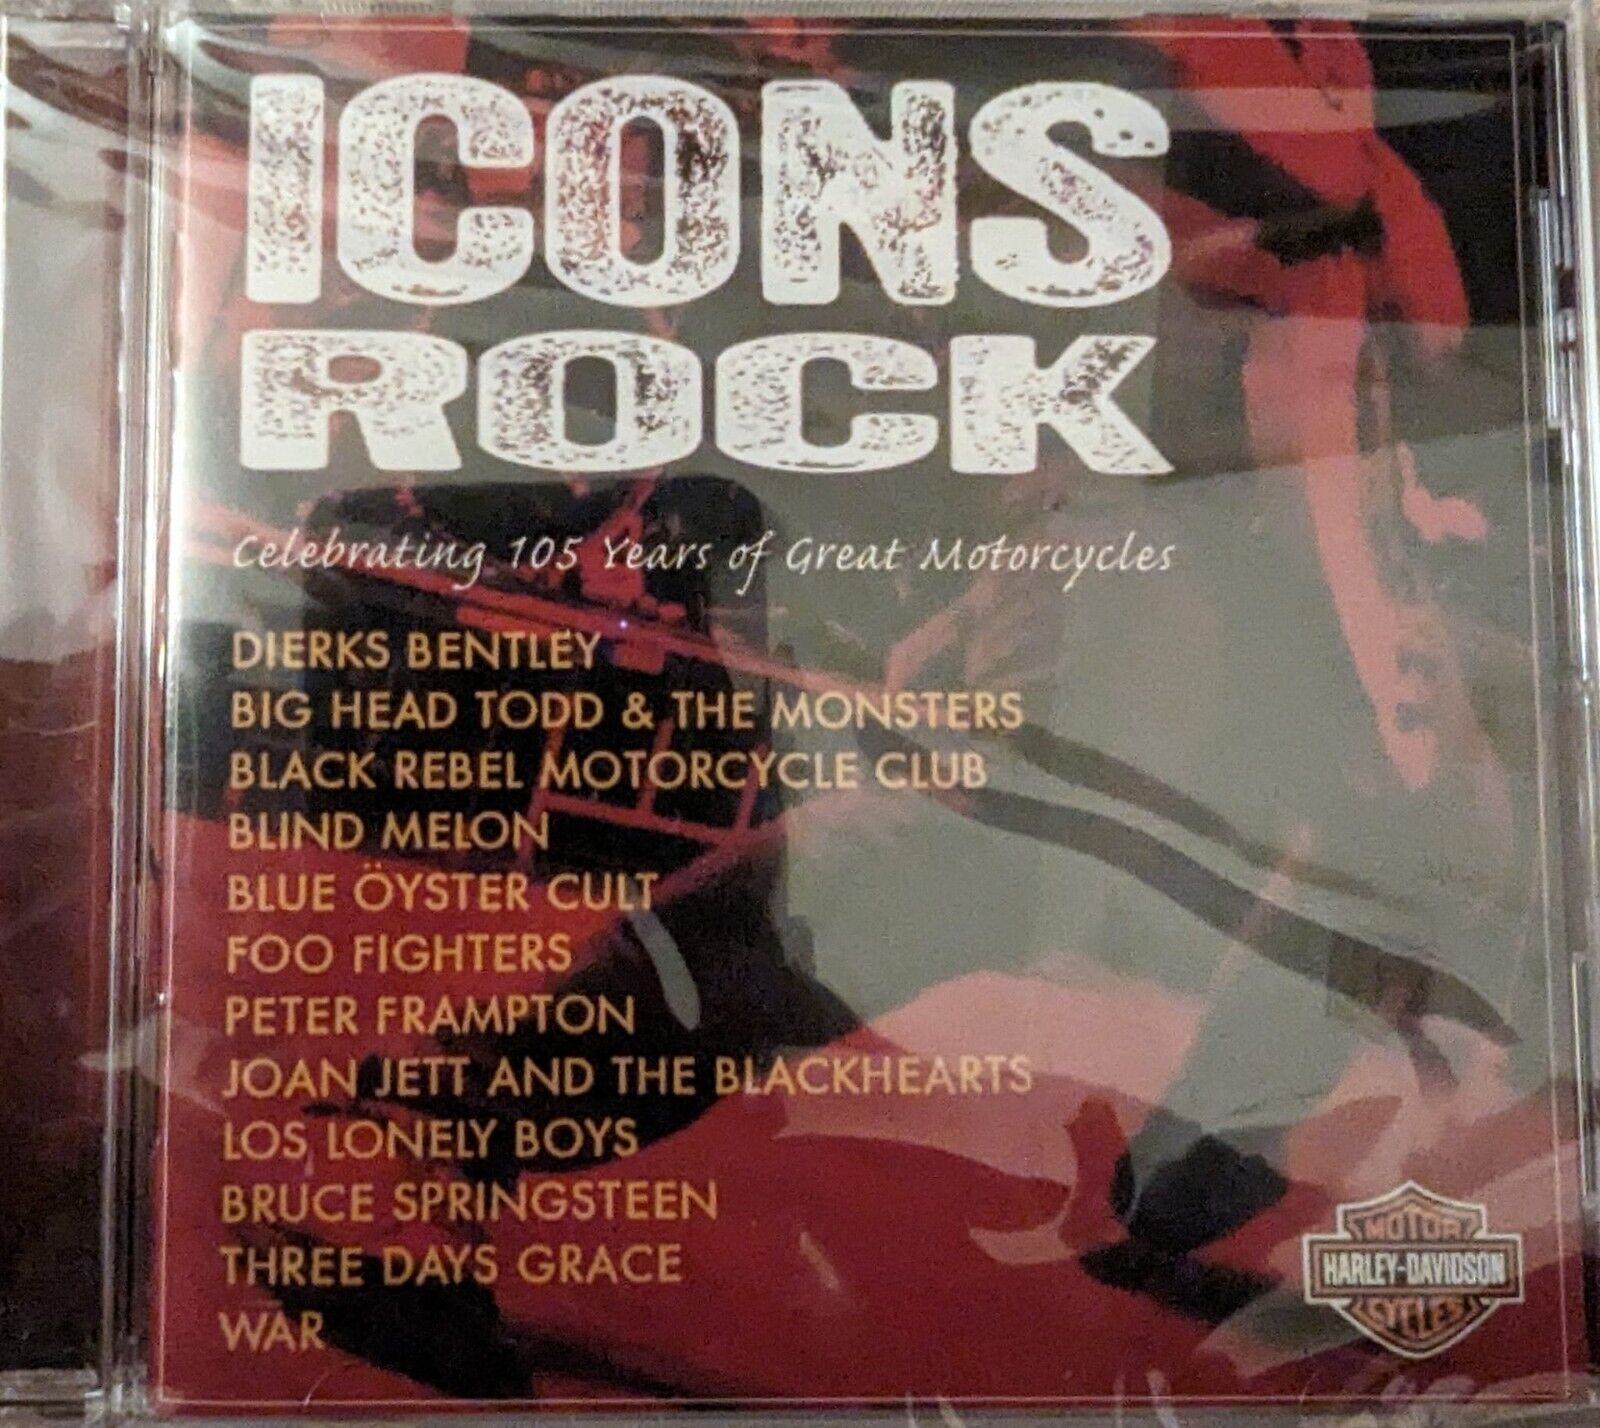 Harley Davidson Icons Of Rock 105 Years Celebration- 4 CDs